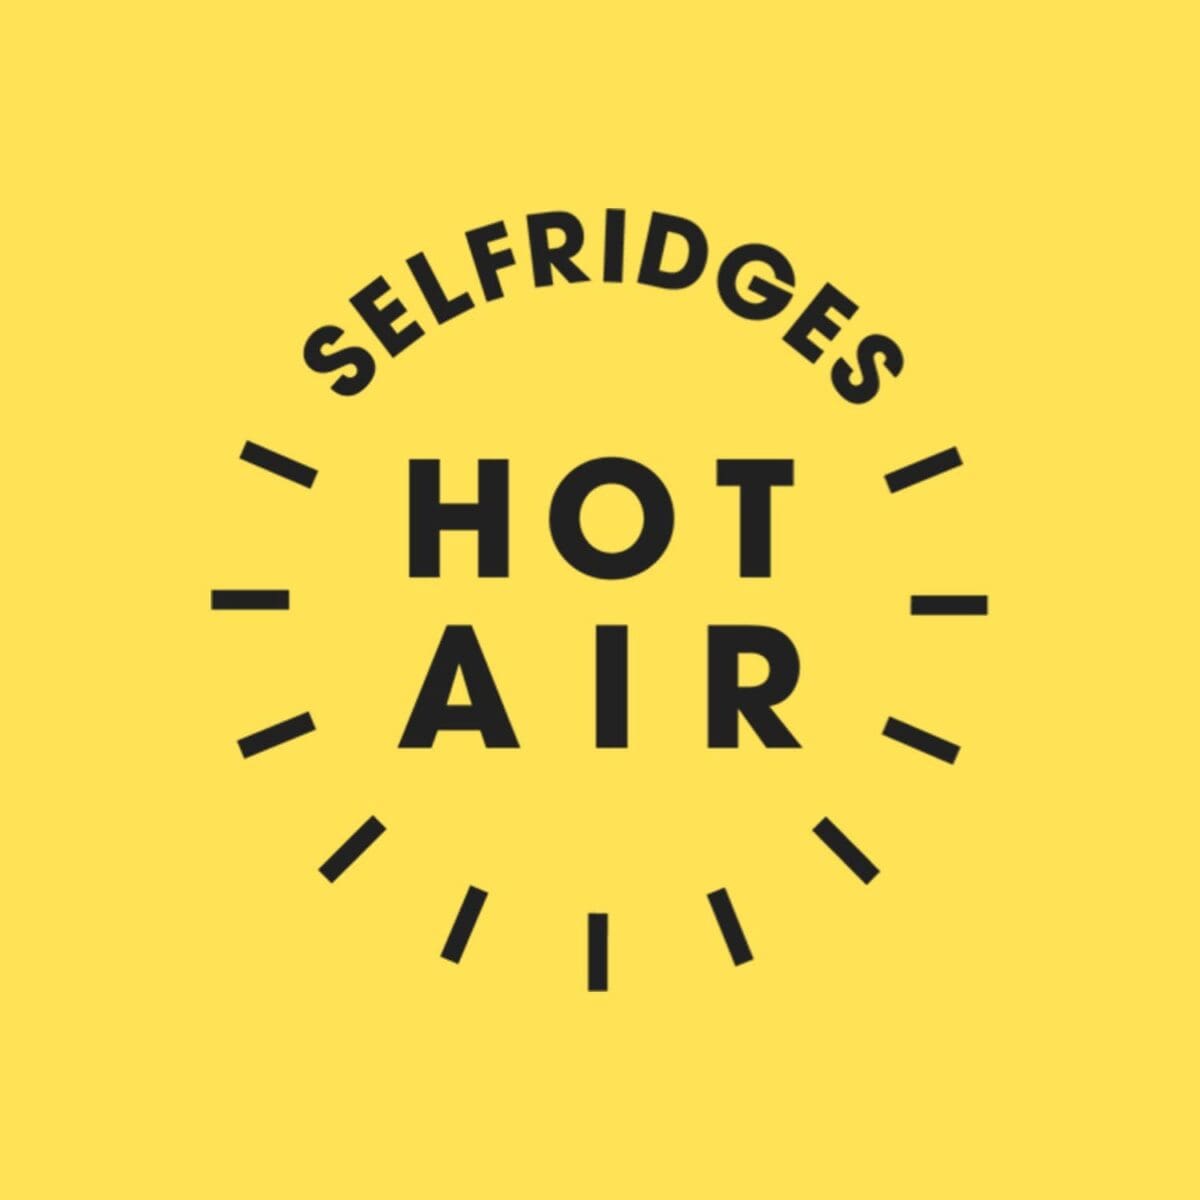 Selfridges Hot Air podcast